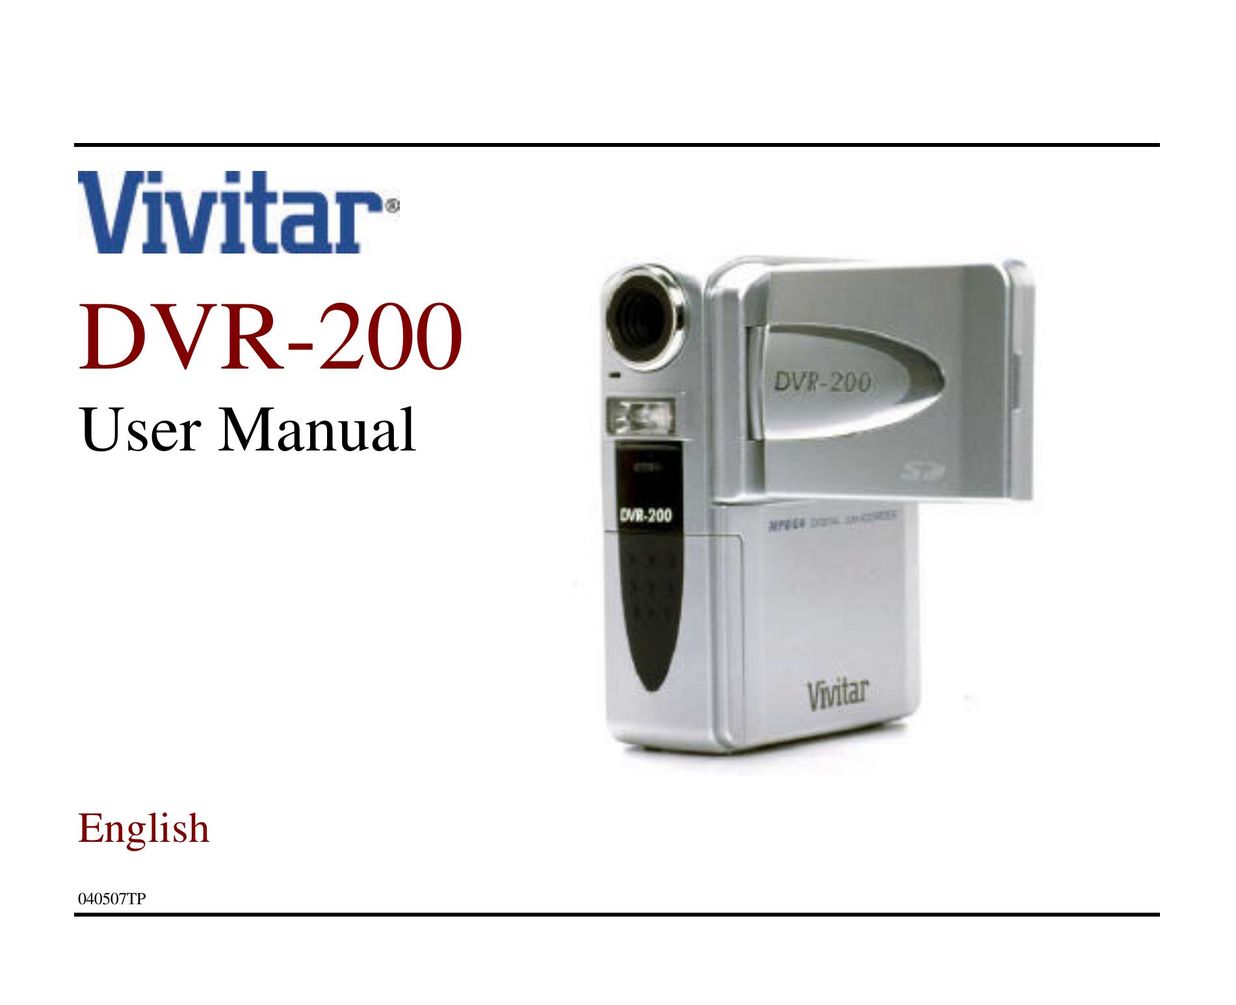 Cool-Lux DVR-200 DVR User Manual